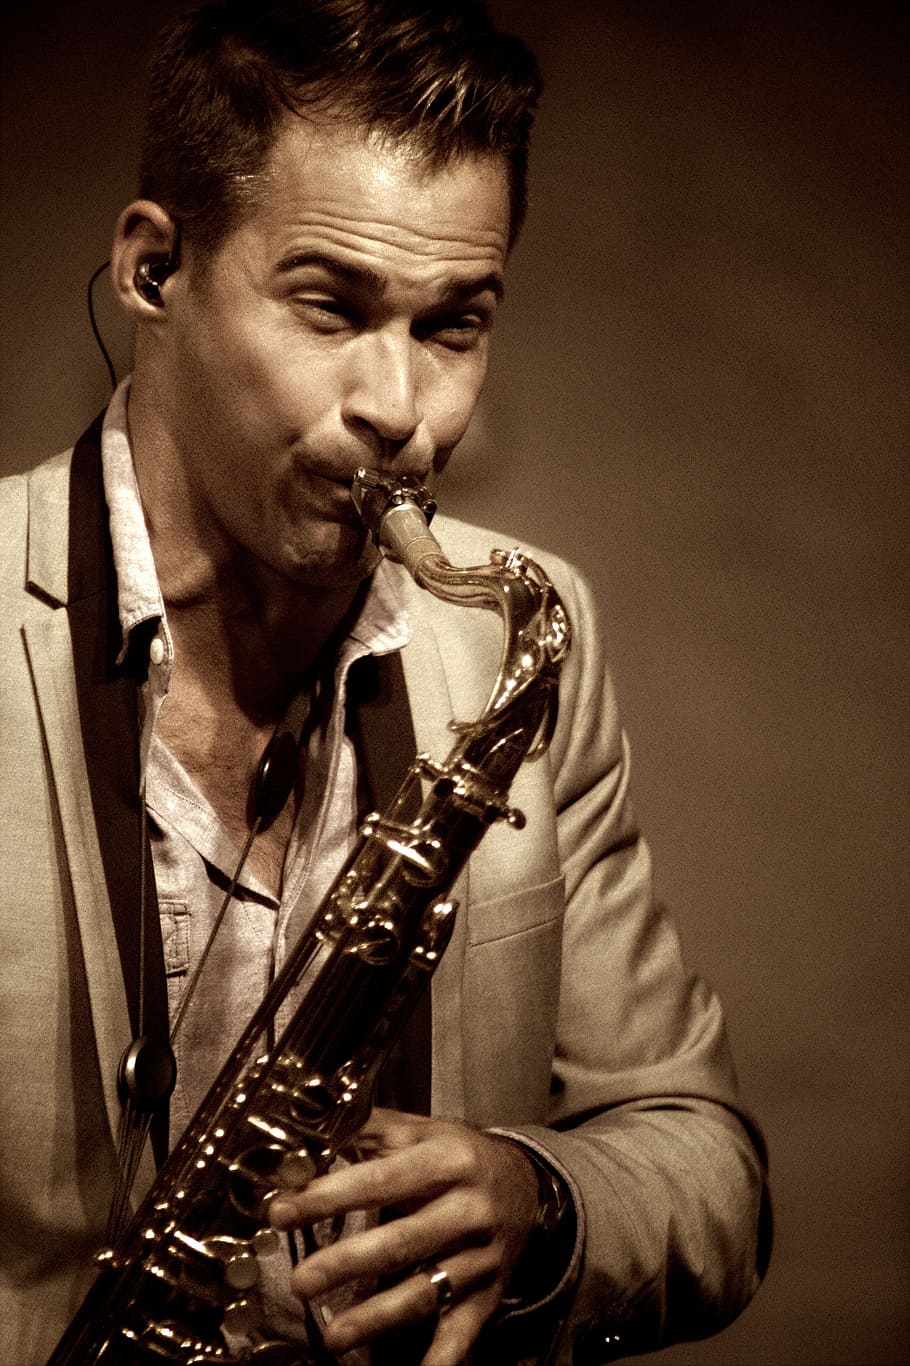 man playing saxophone, jazz artist, musician, sax, performance, music, jazz, solo, man, musical